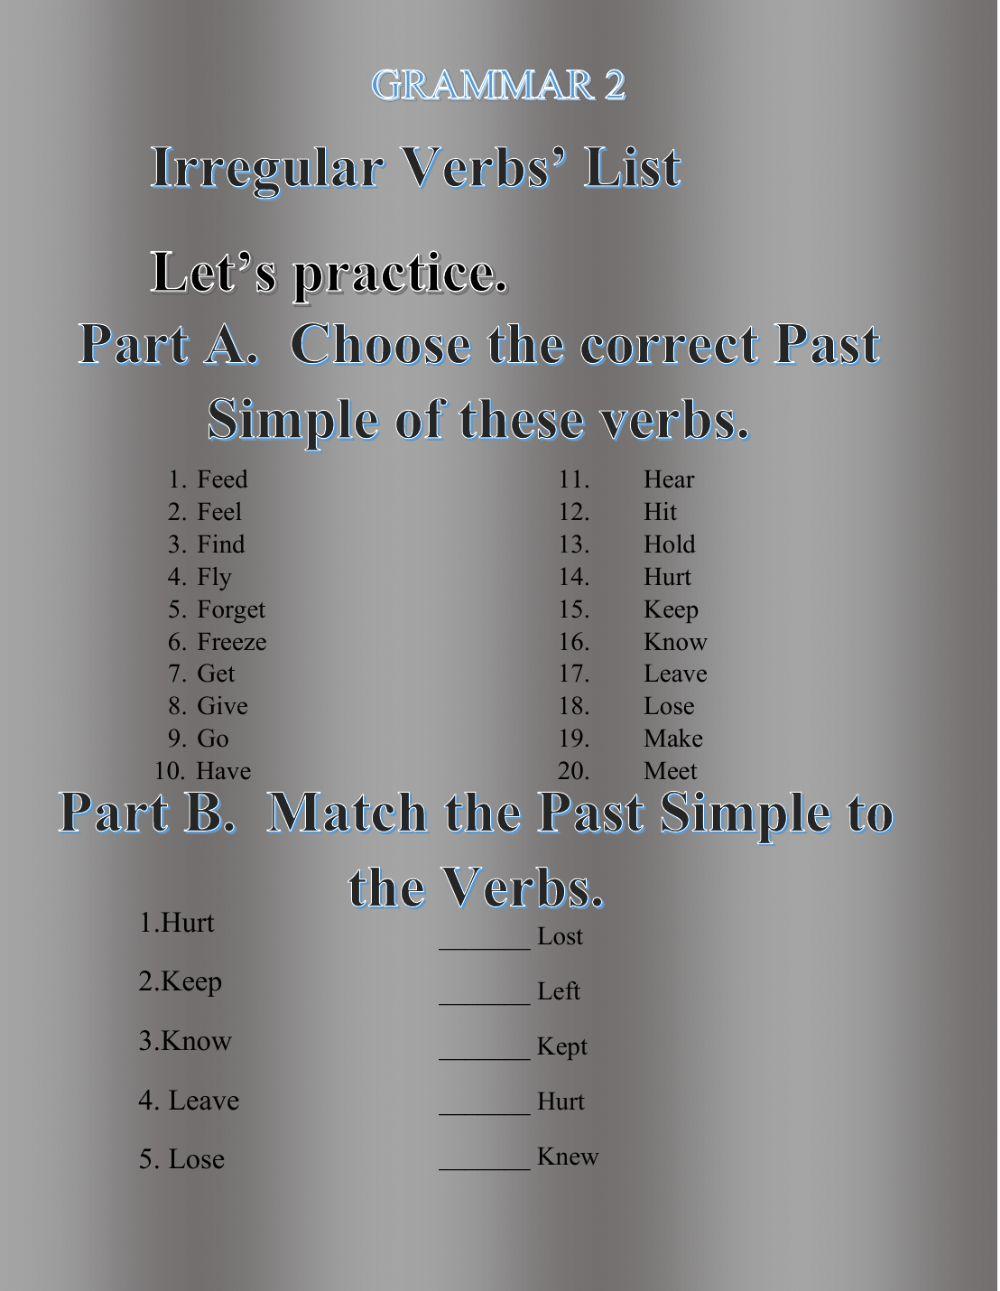 Irregular Verbs in Past Simple 1